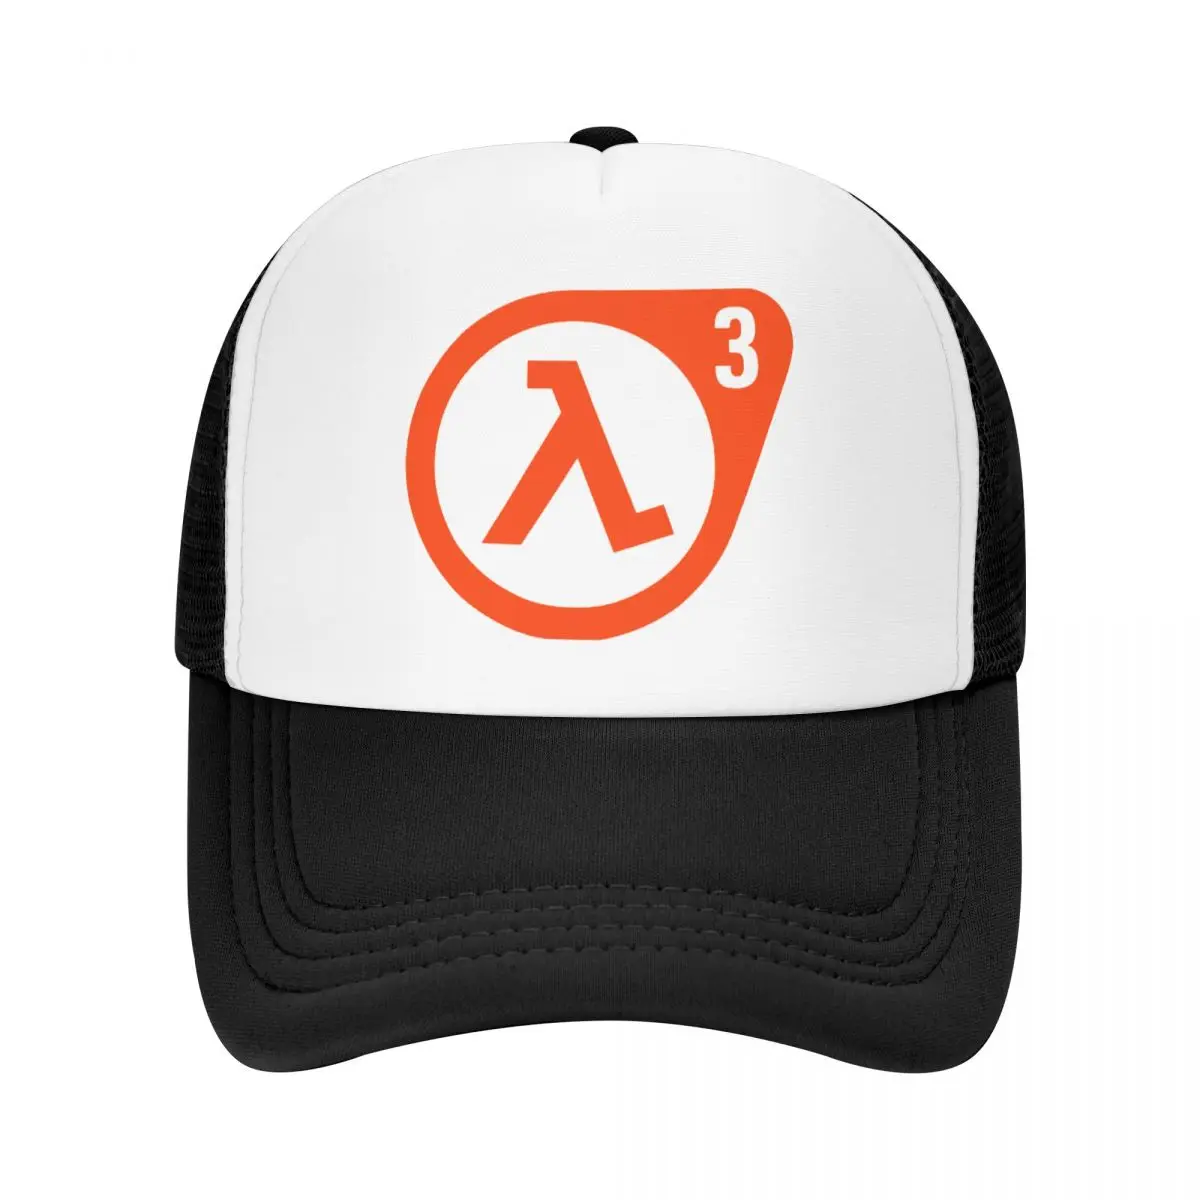 

Half Life 3 Stretchy Trucker Hat Mesh Baseball Cap Adjustable Snapback Closure Hats for Men Women Comfortable Breathable